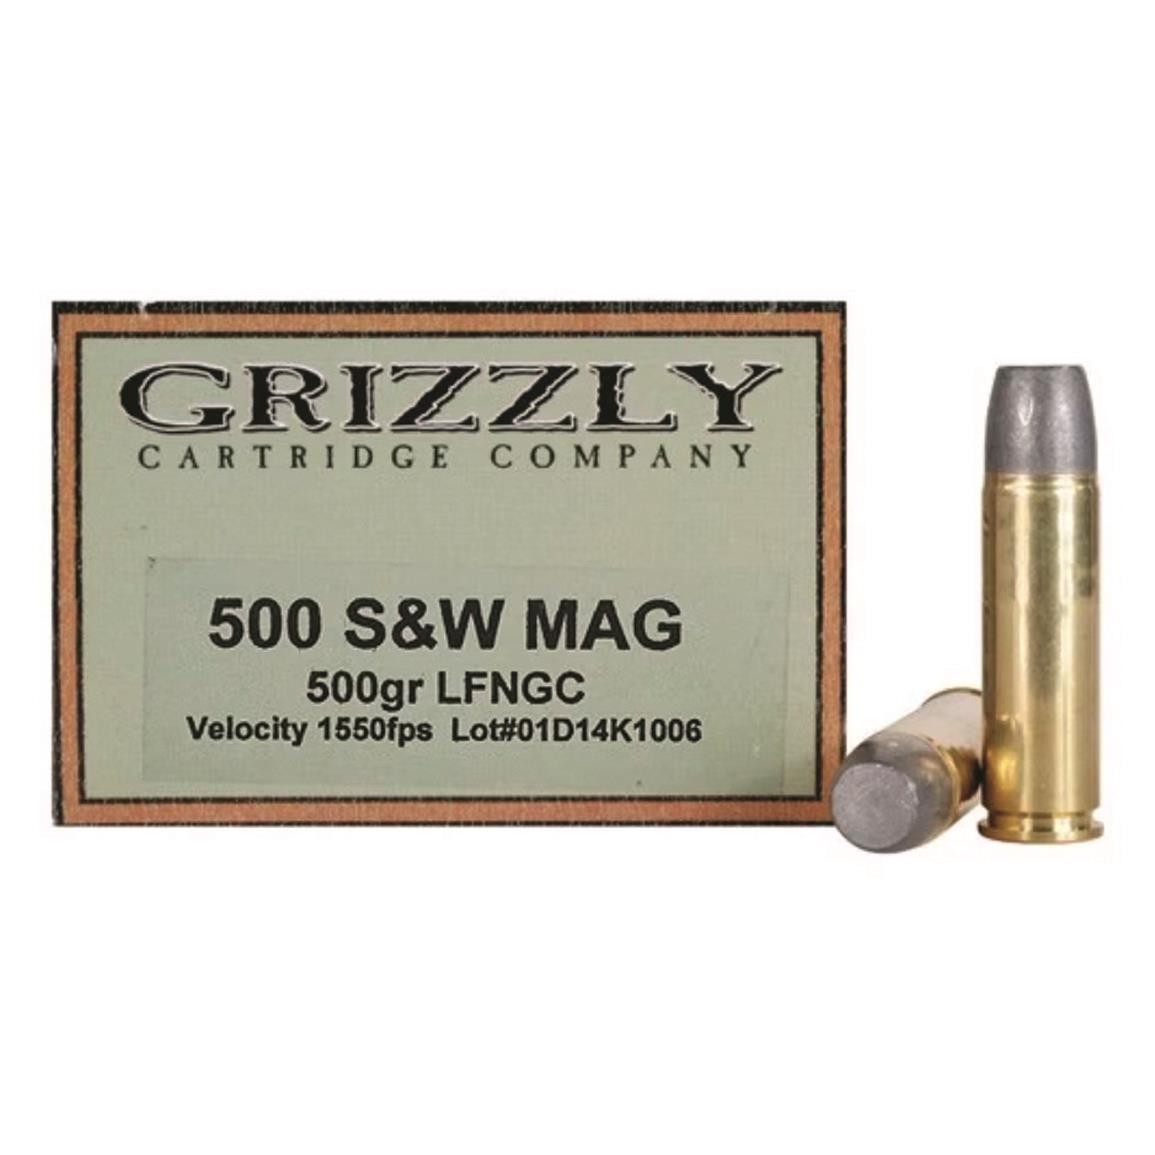 Grizzly Cartridge Co. High Performance Handgun, .500 S&W Magnum, LFNGC, 500 Grain, 20 Rounds